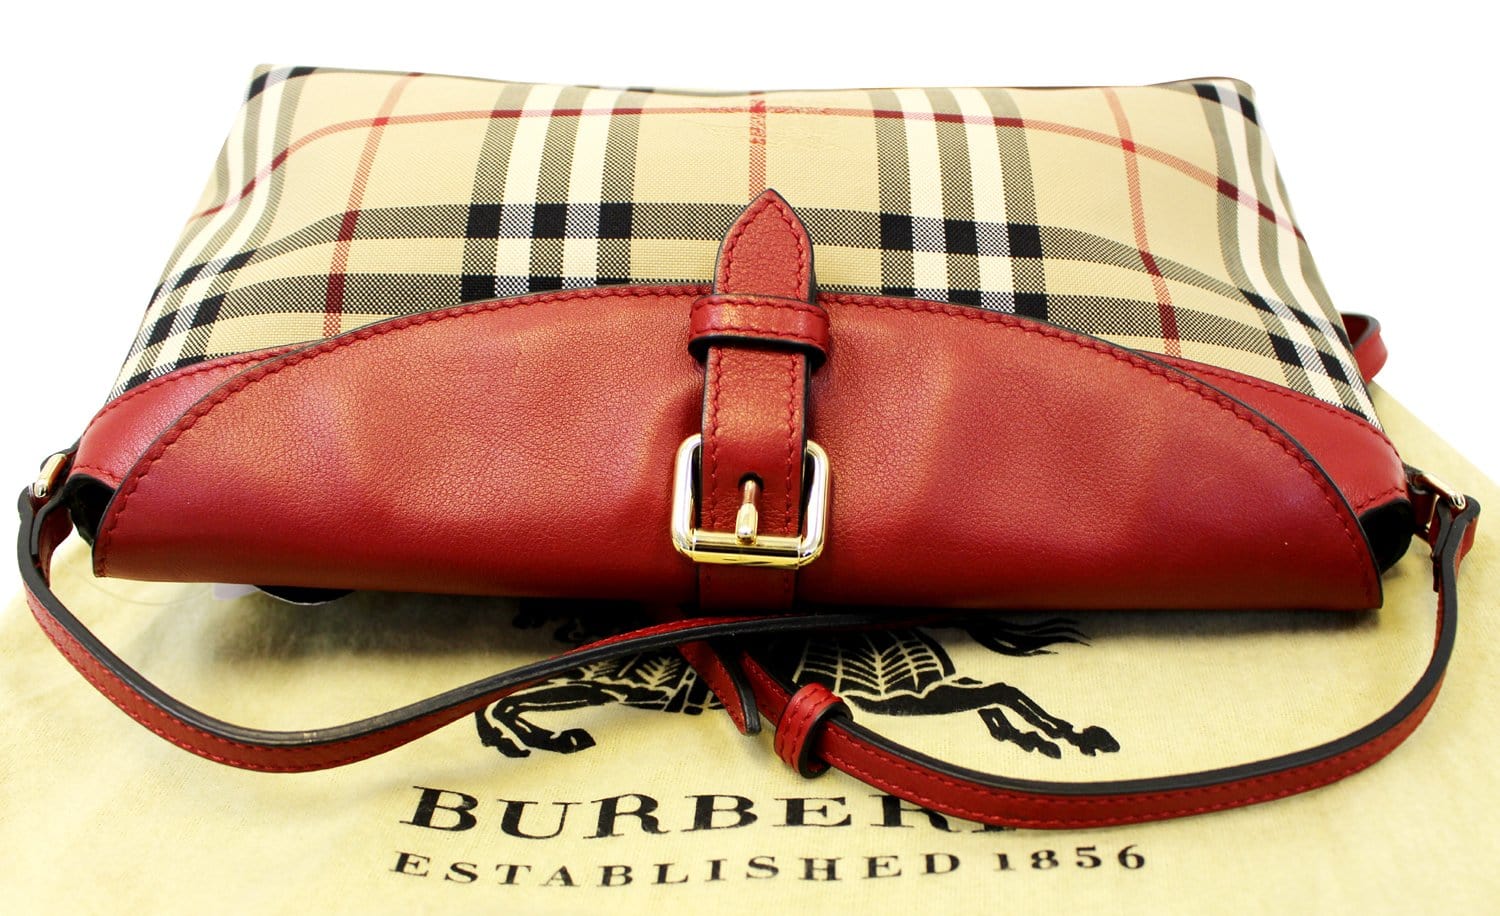 Burberry Horseferry Canvas Crossbody Bag